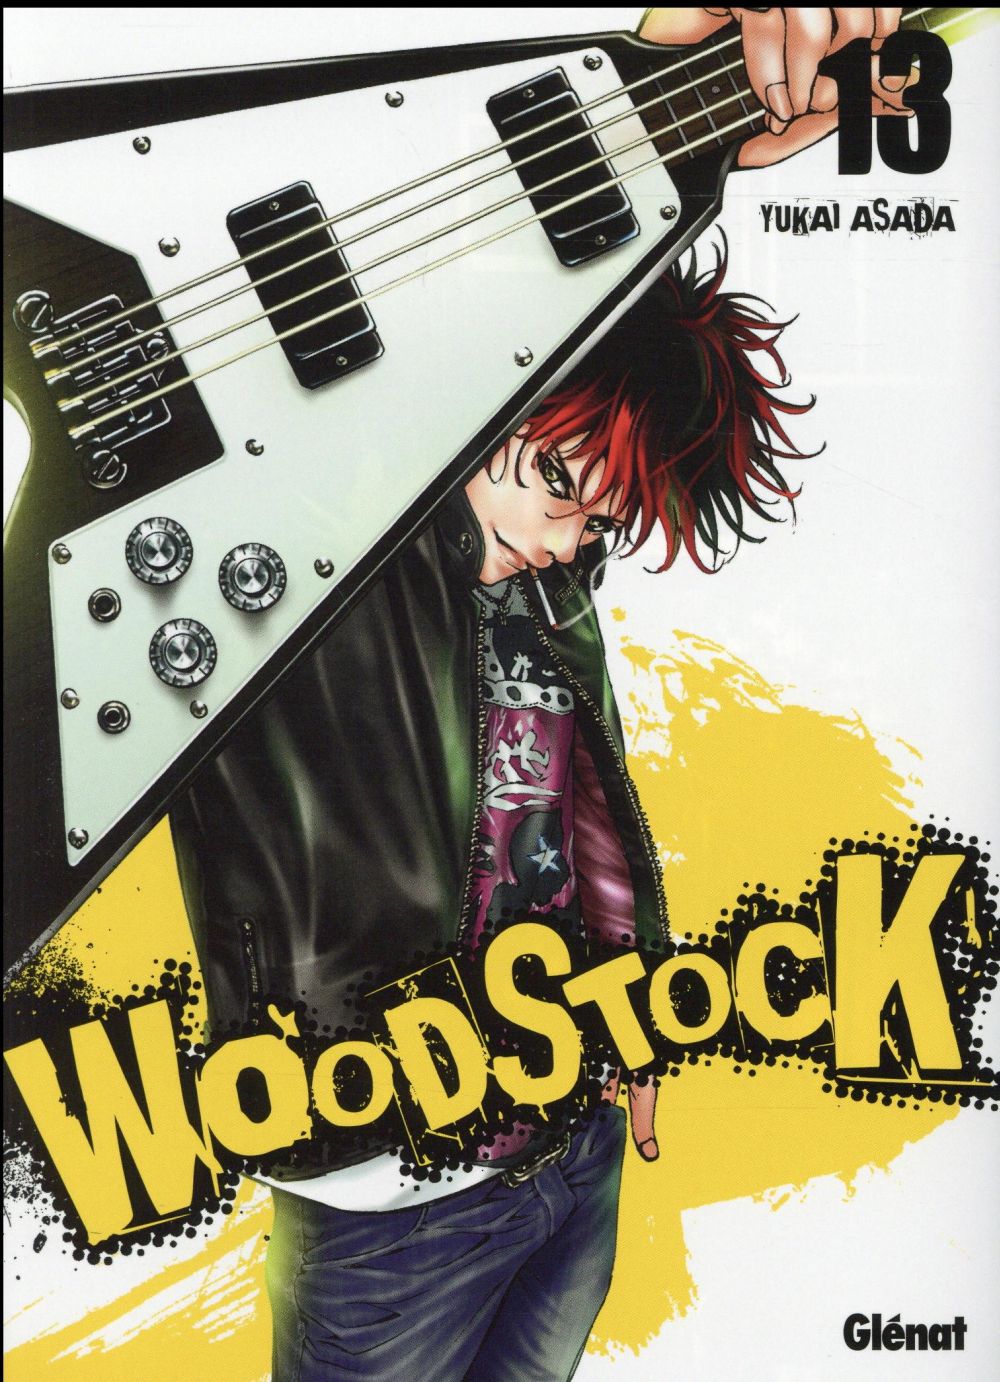 WOODSTOCK - TOME 13